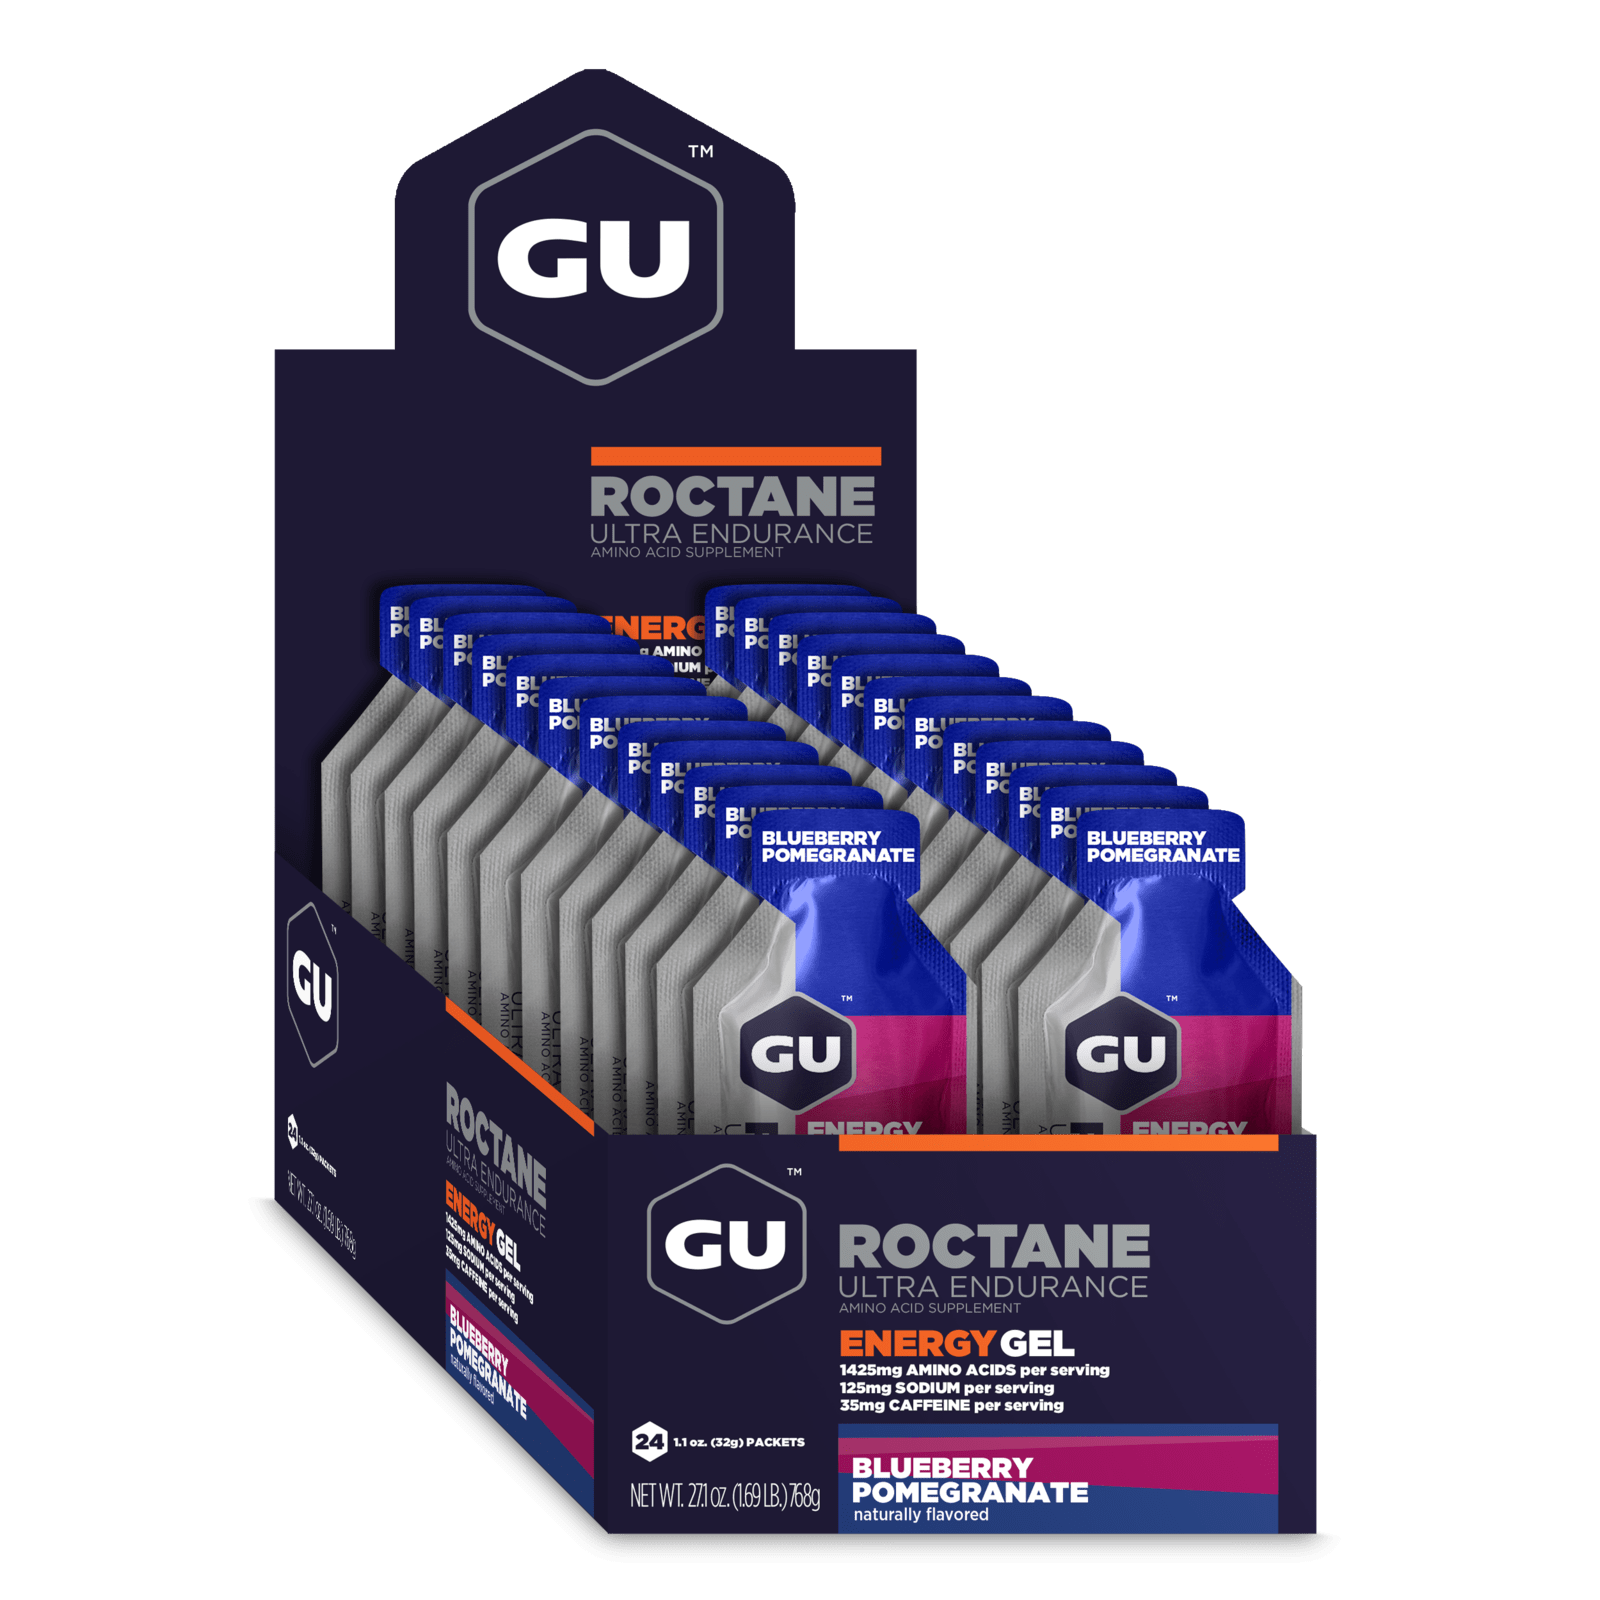 GU Energy Energi gel Roctane Blueberry Pomegranate med koffein (24 x 32g)